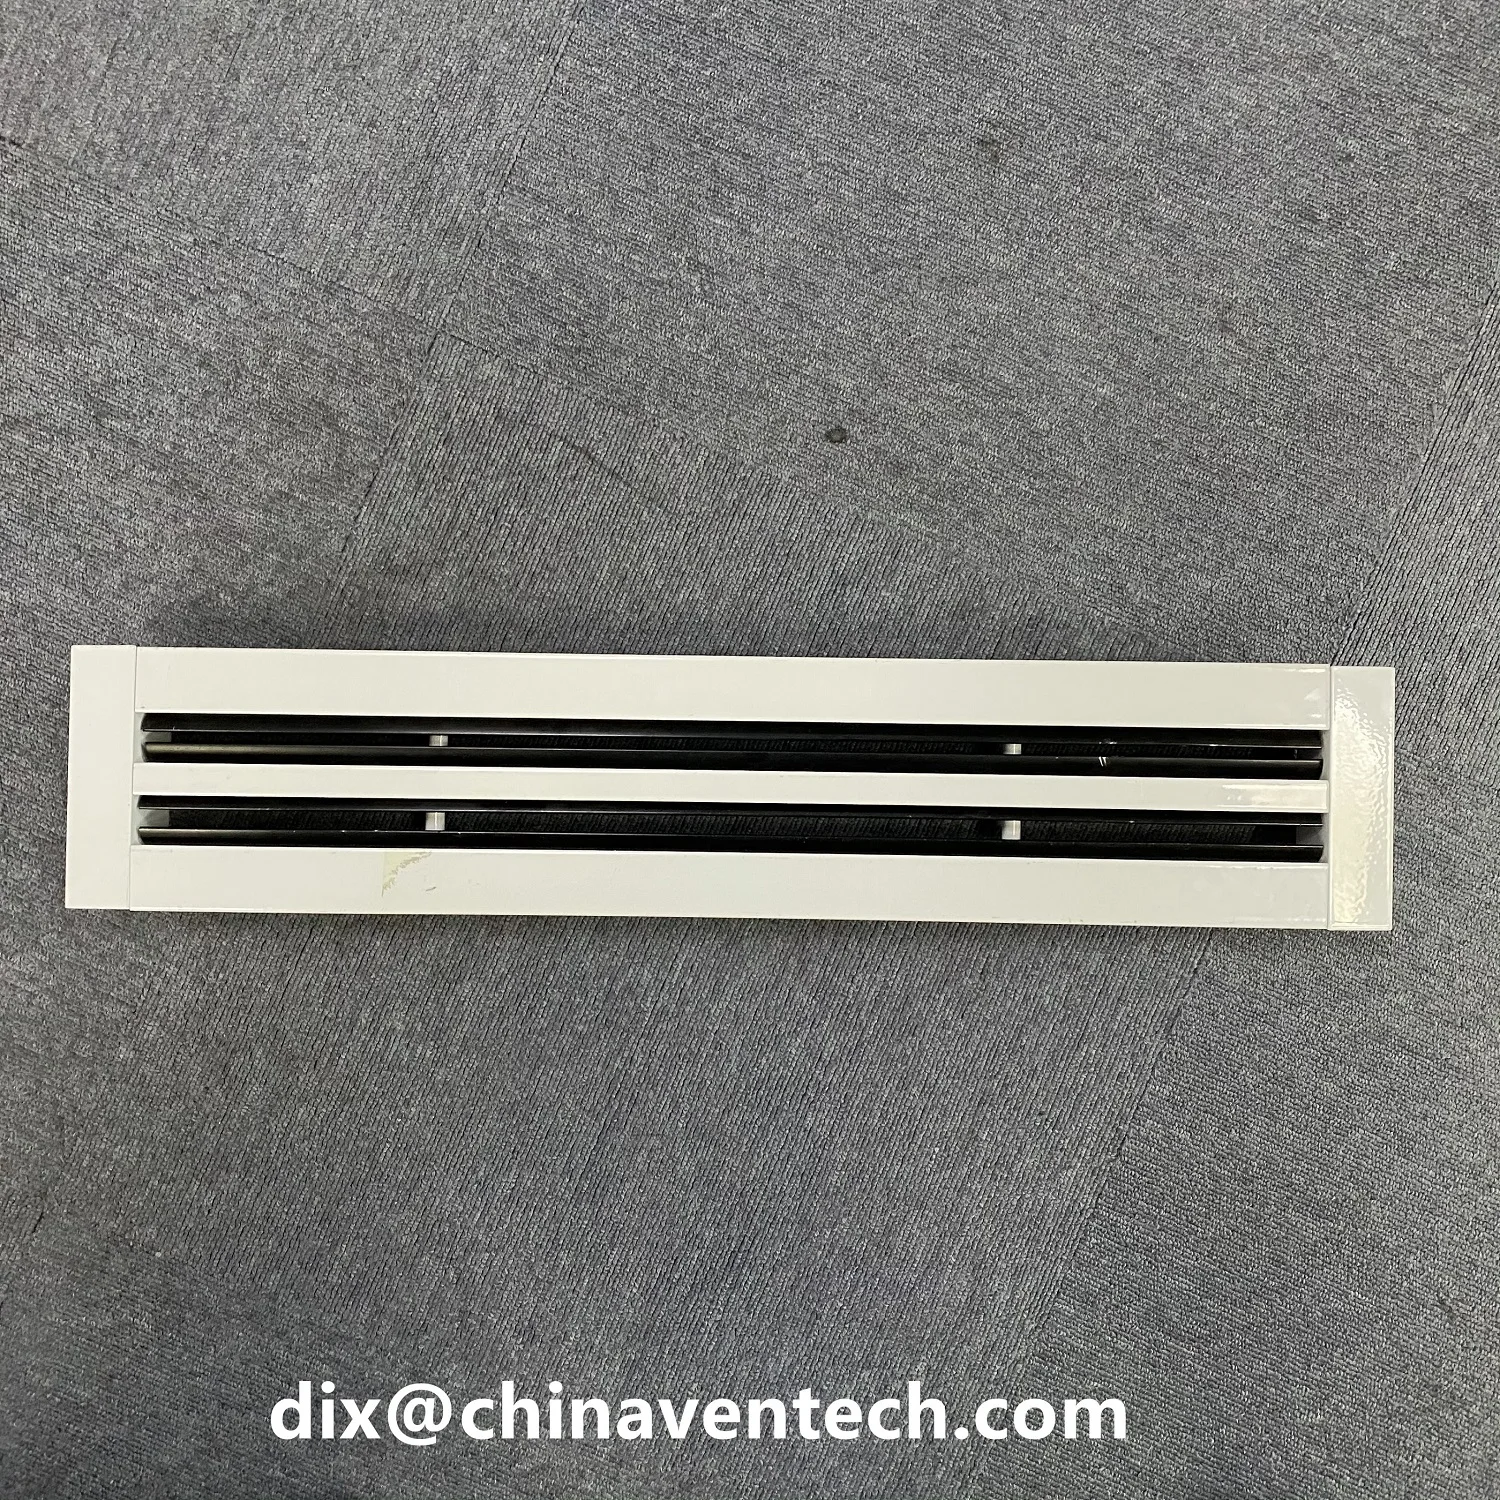 Ventech best quality ventilation wall return ceiling flange end design return air linear slot diffuser